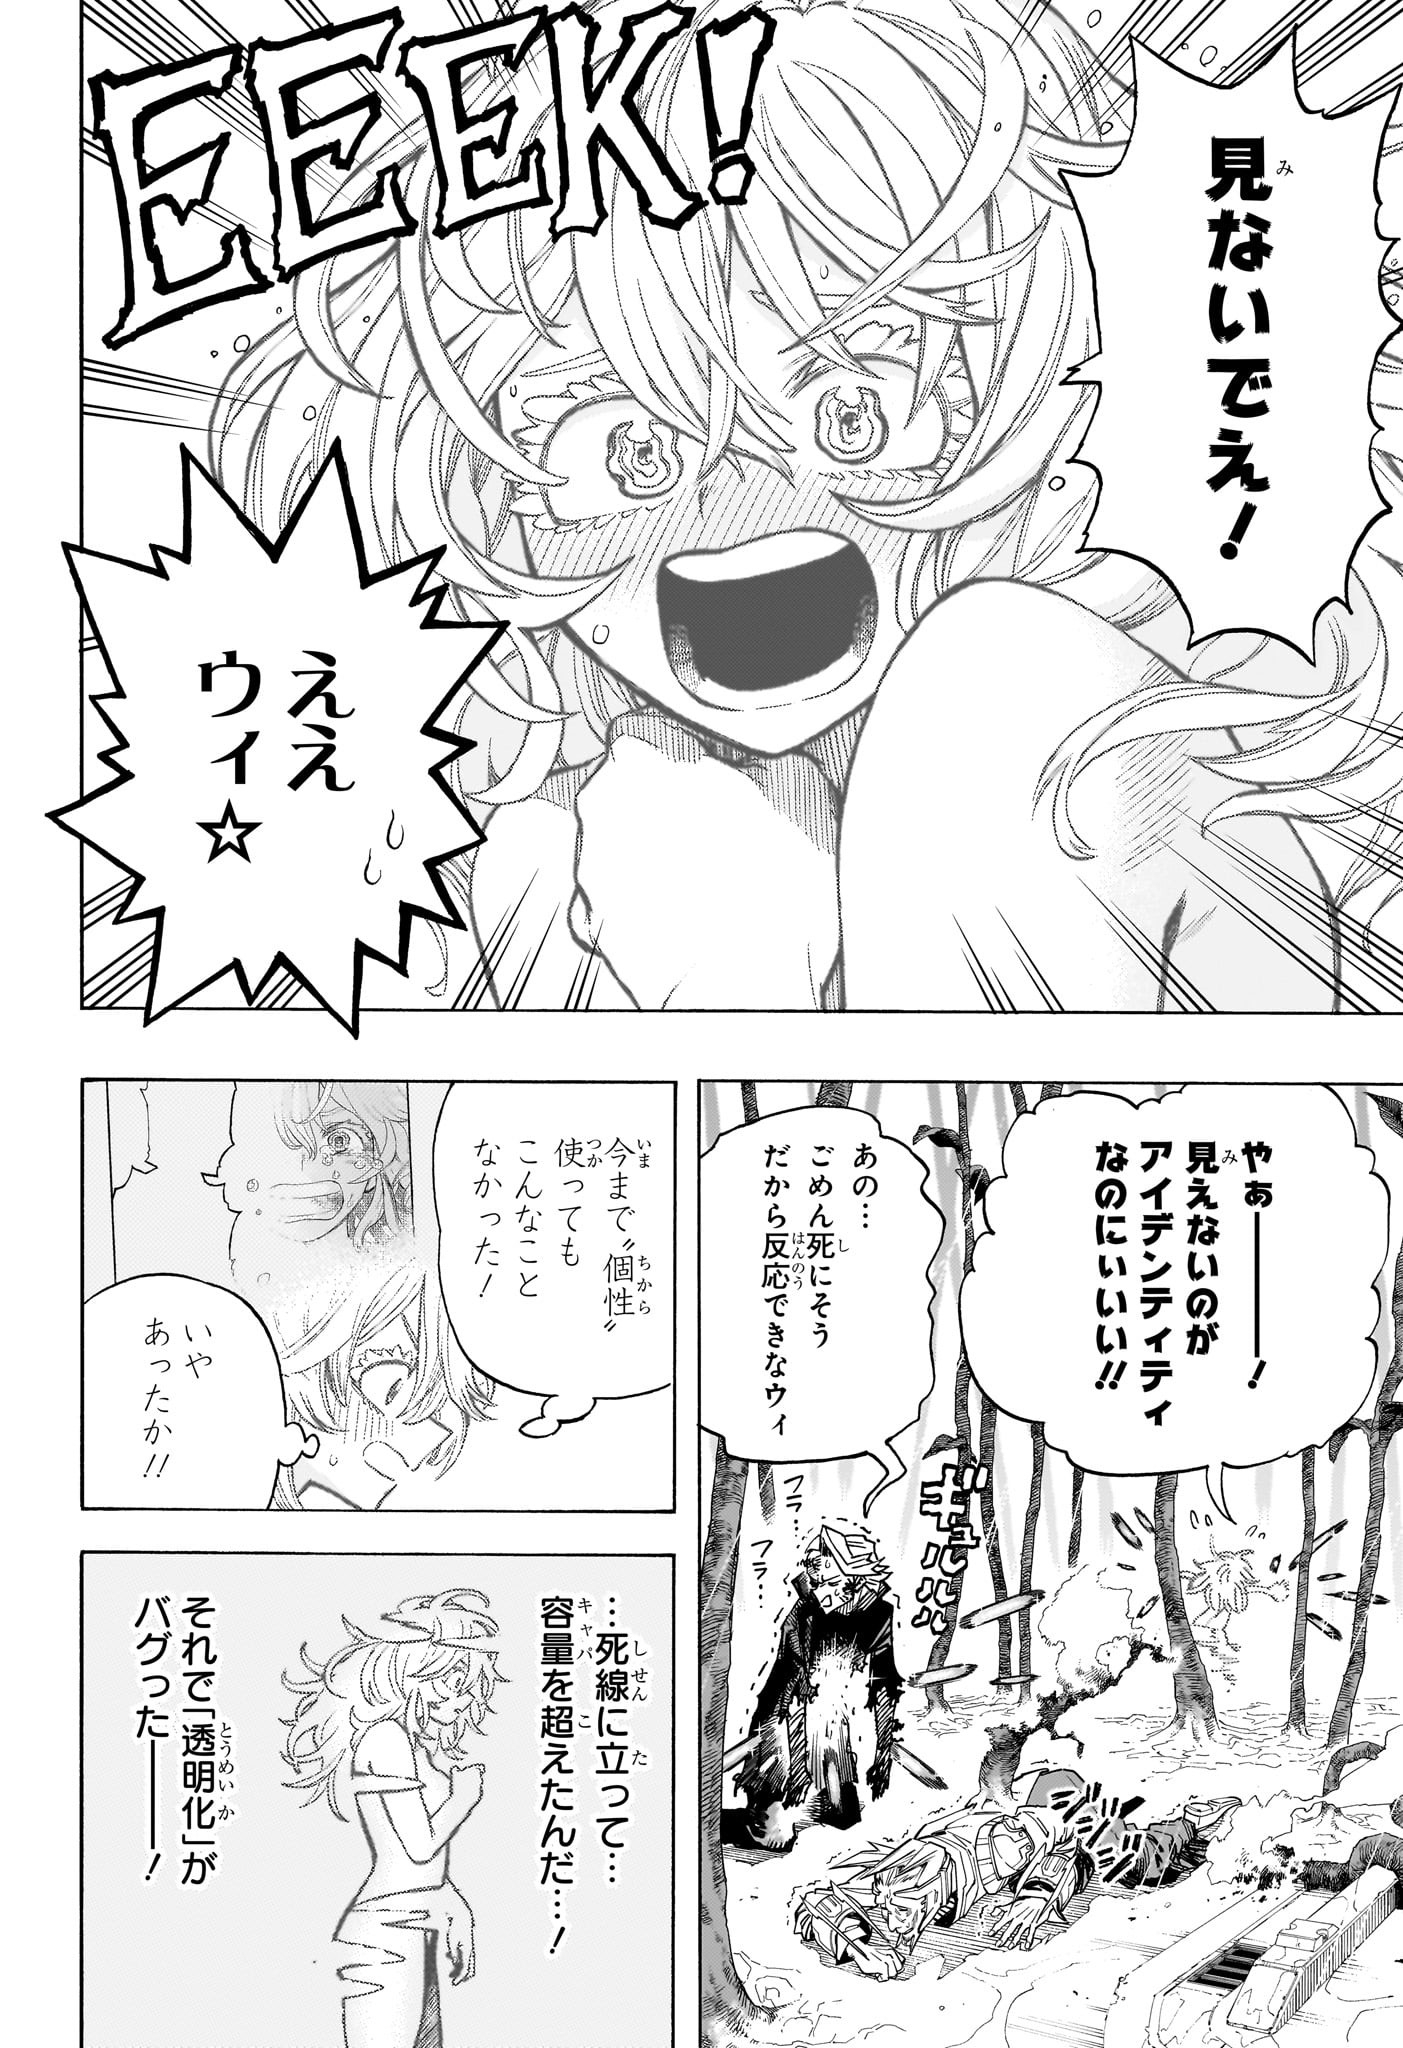 Boku no Hero Academia - Chapter 400 - Page 2